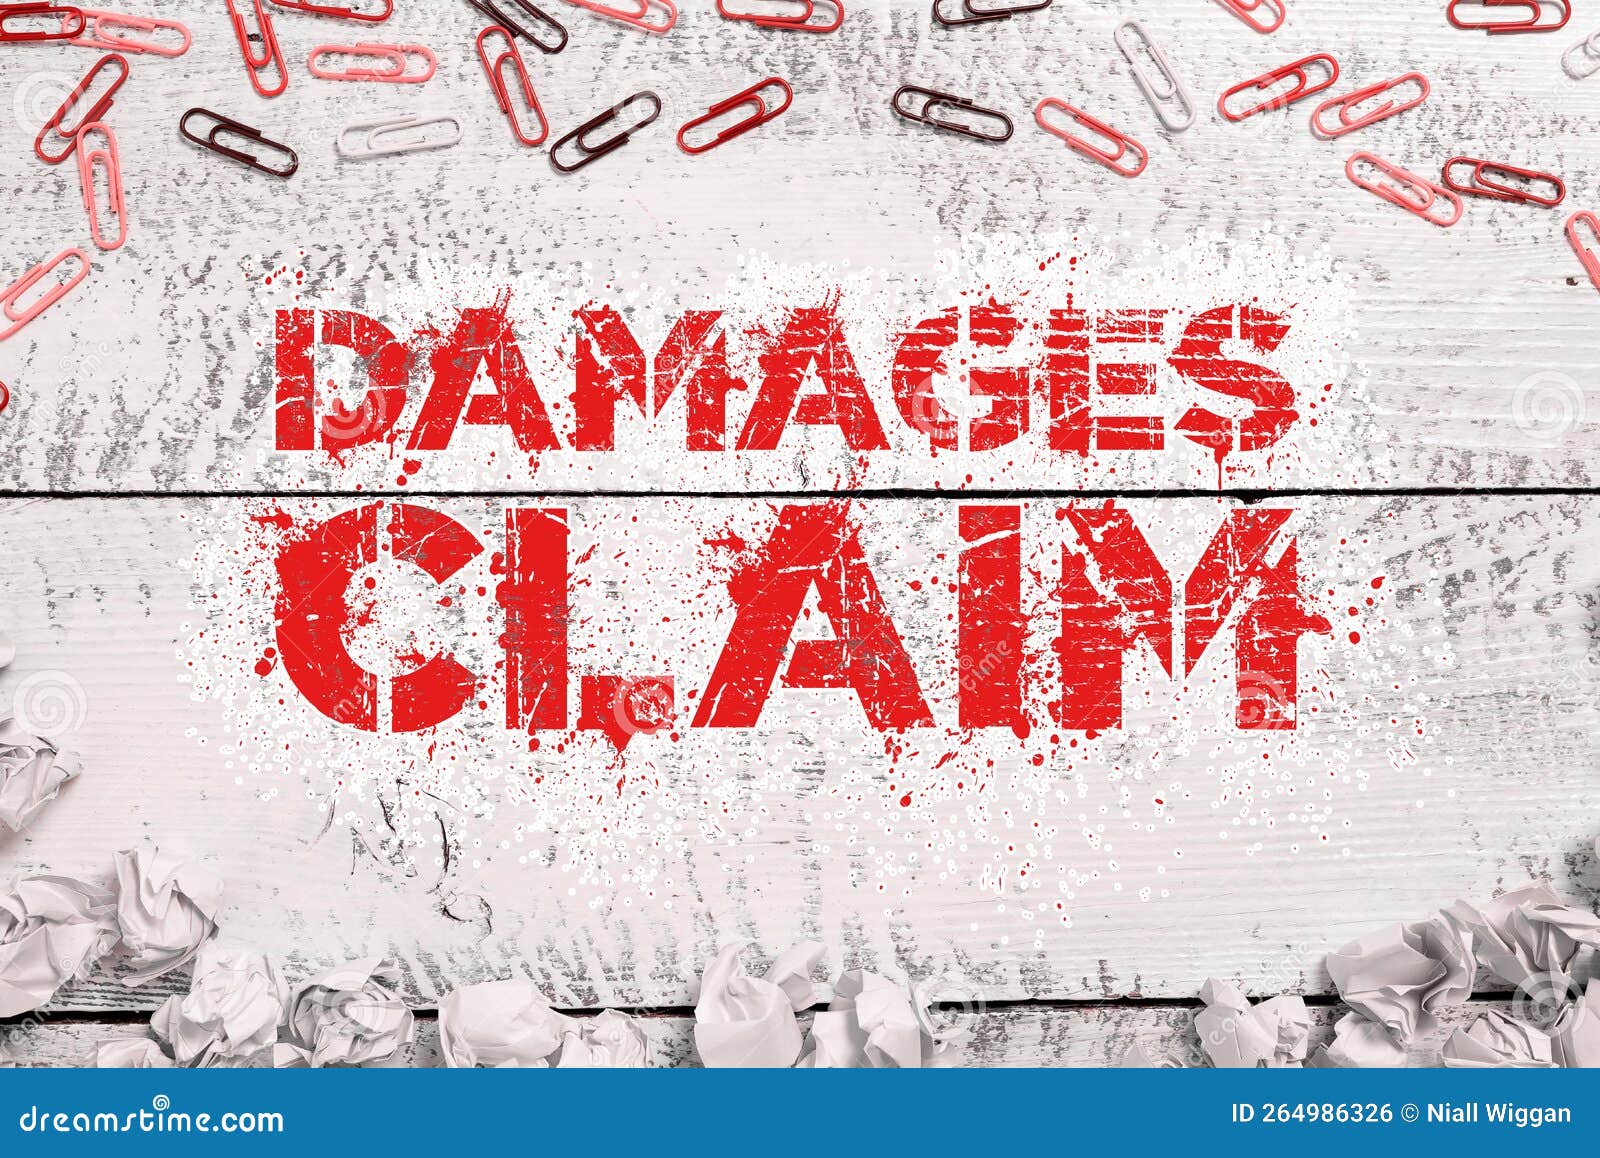 text caption presenting damages claim. word written on demand compensation litigate insurance file suit